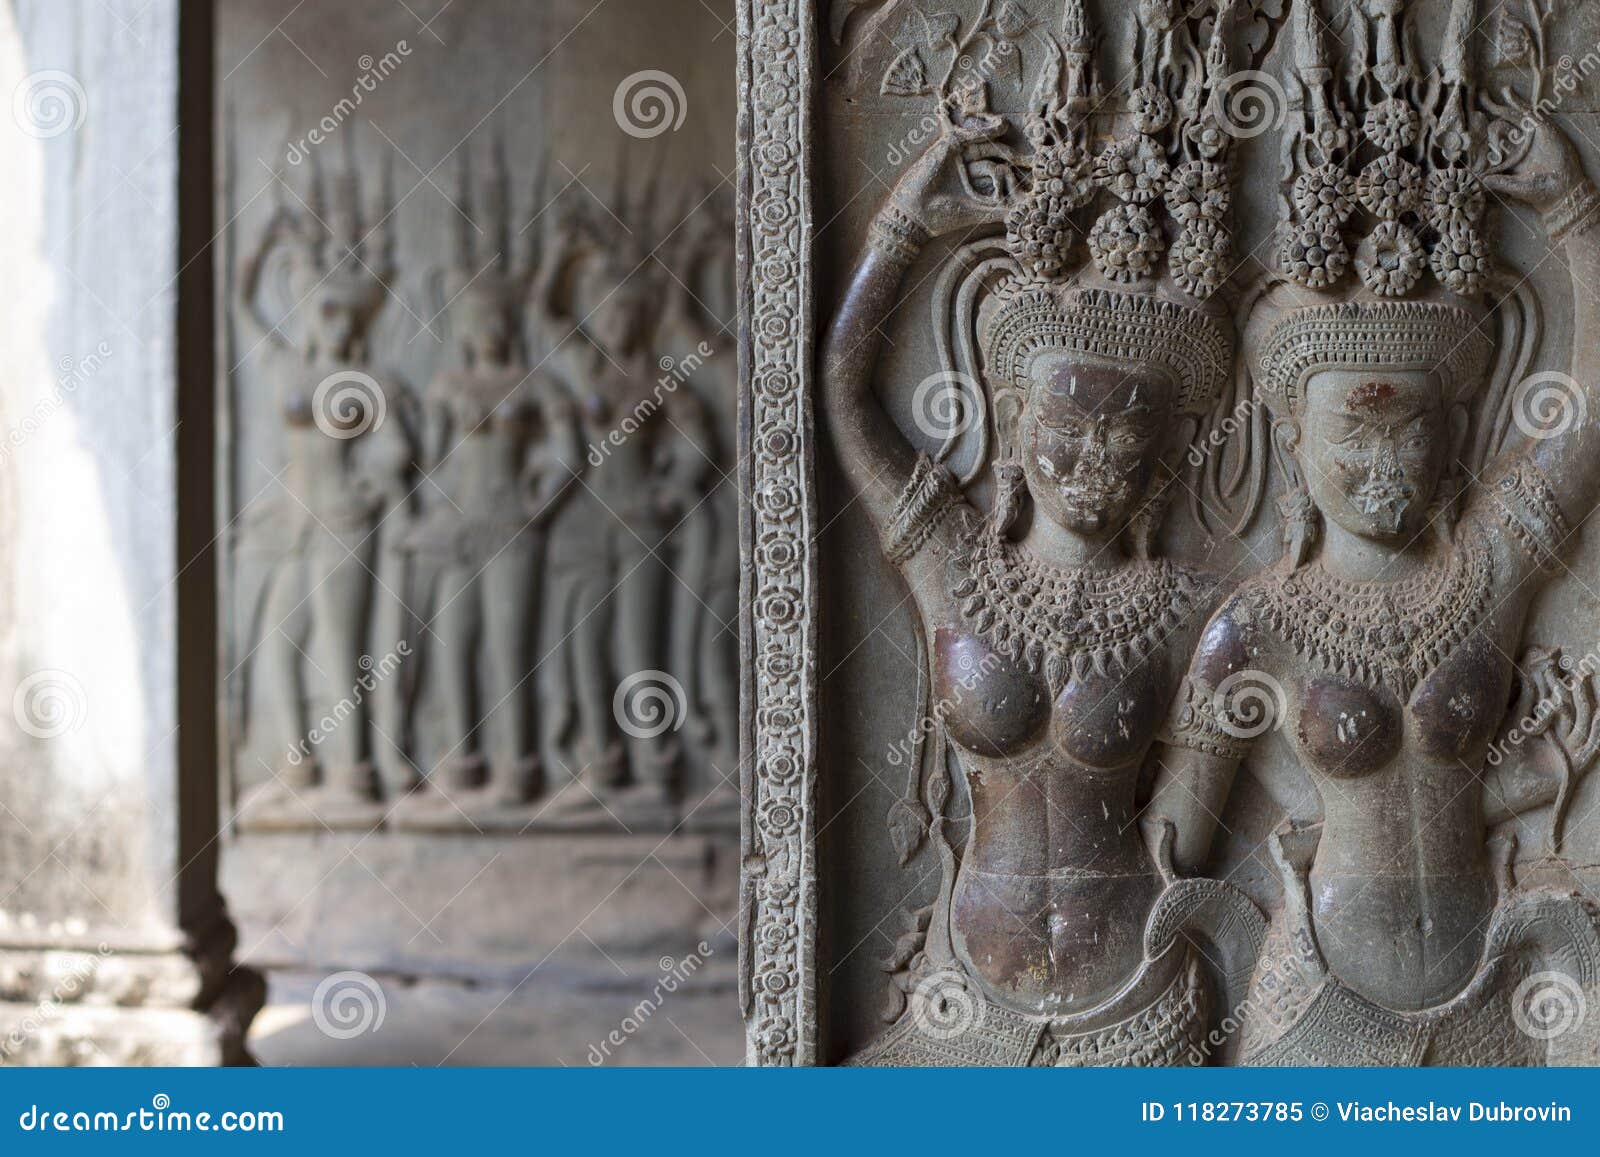 stone-bas-relief-human-figure-angkor-wat